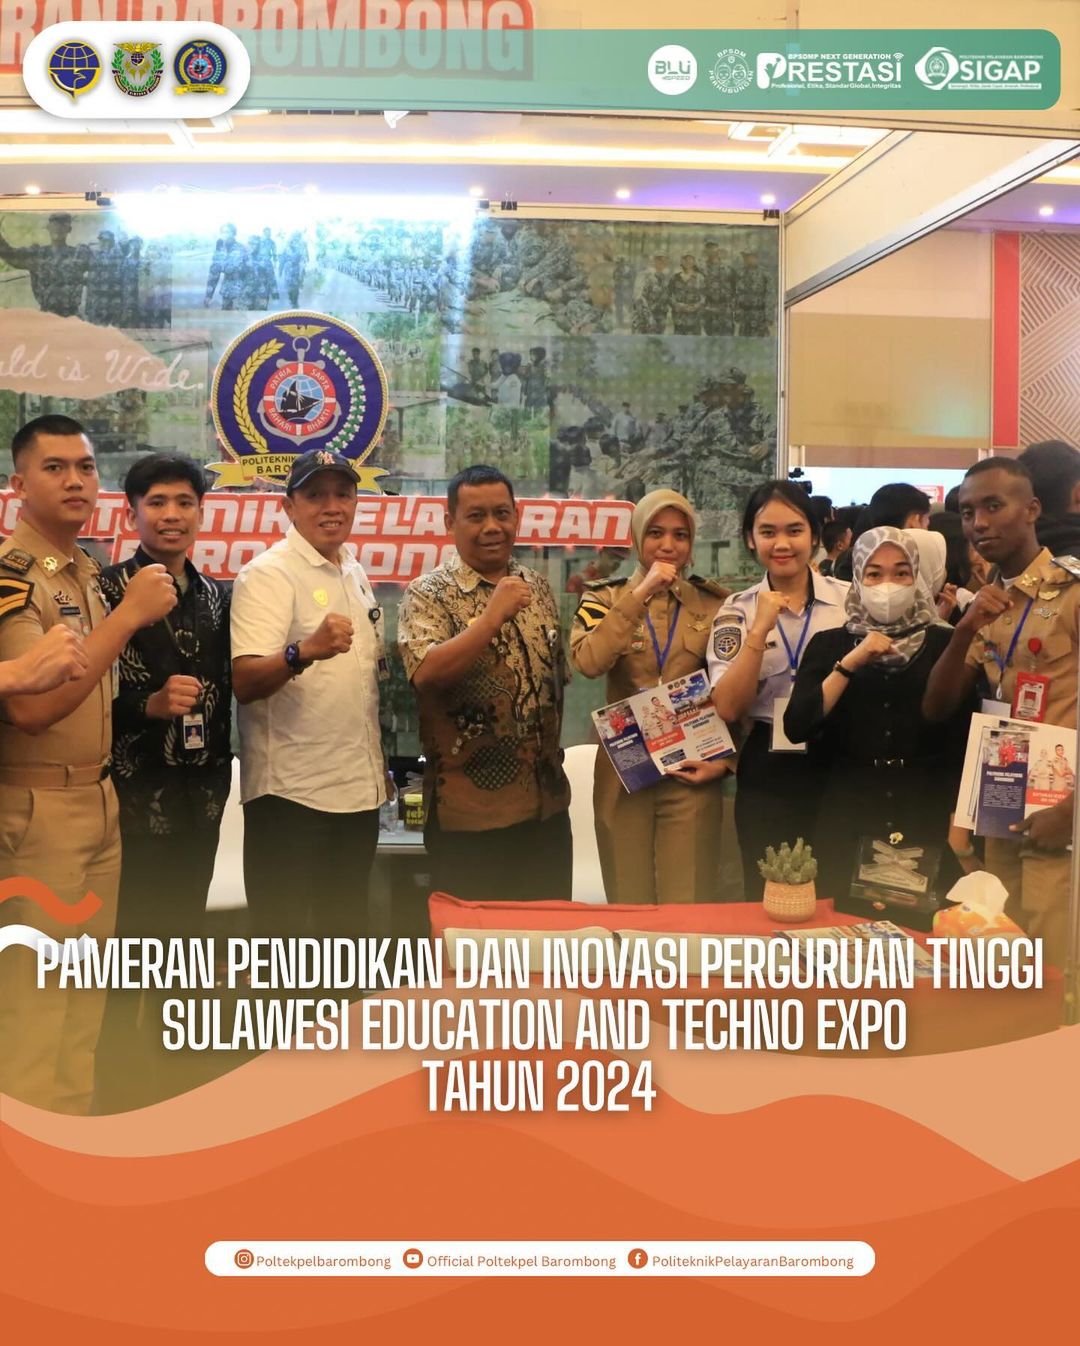 You are currently viewing Politeknik Pelayaran Barombong Mengikuti event Pameran Pendidikan dan inovasi Perguruan Tinggi Sulawesi Education & Techno Expo tahun 2024, Selasa(23/01)